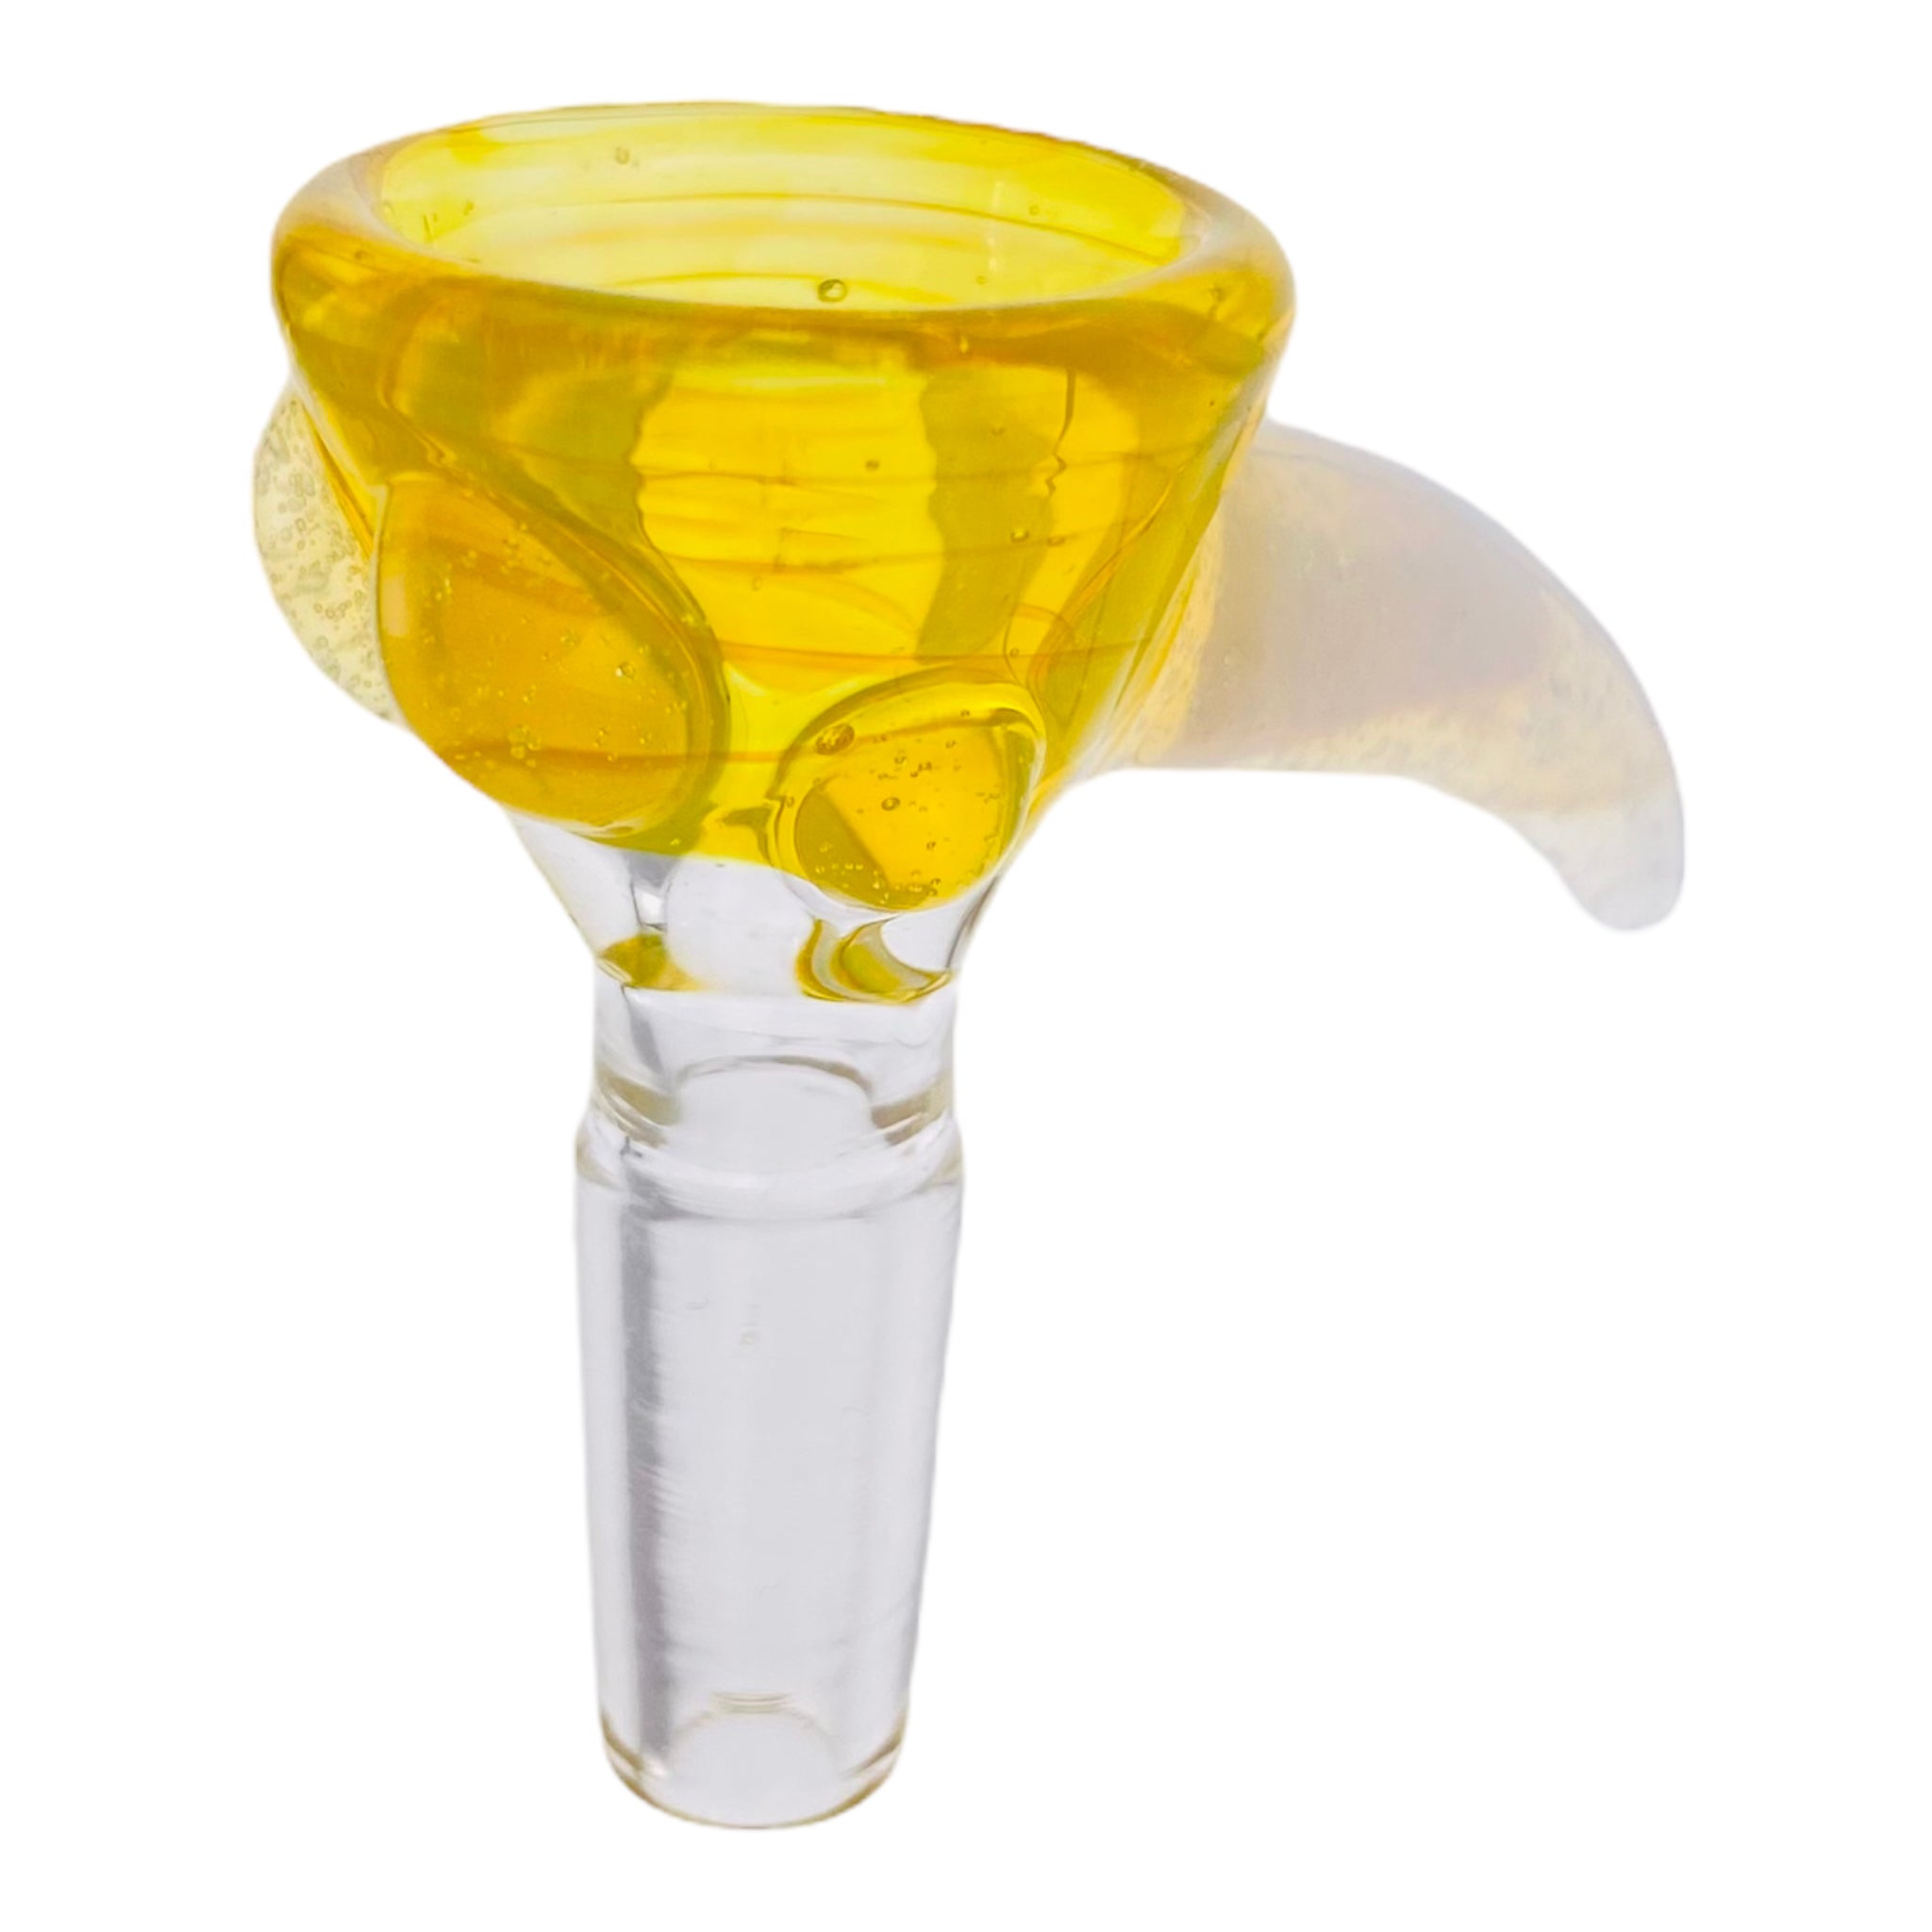 Arko Glass - 10mm Flower Bowl - Alientech With Golden Yellow Handle & Dots